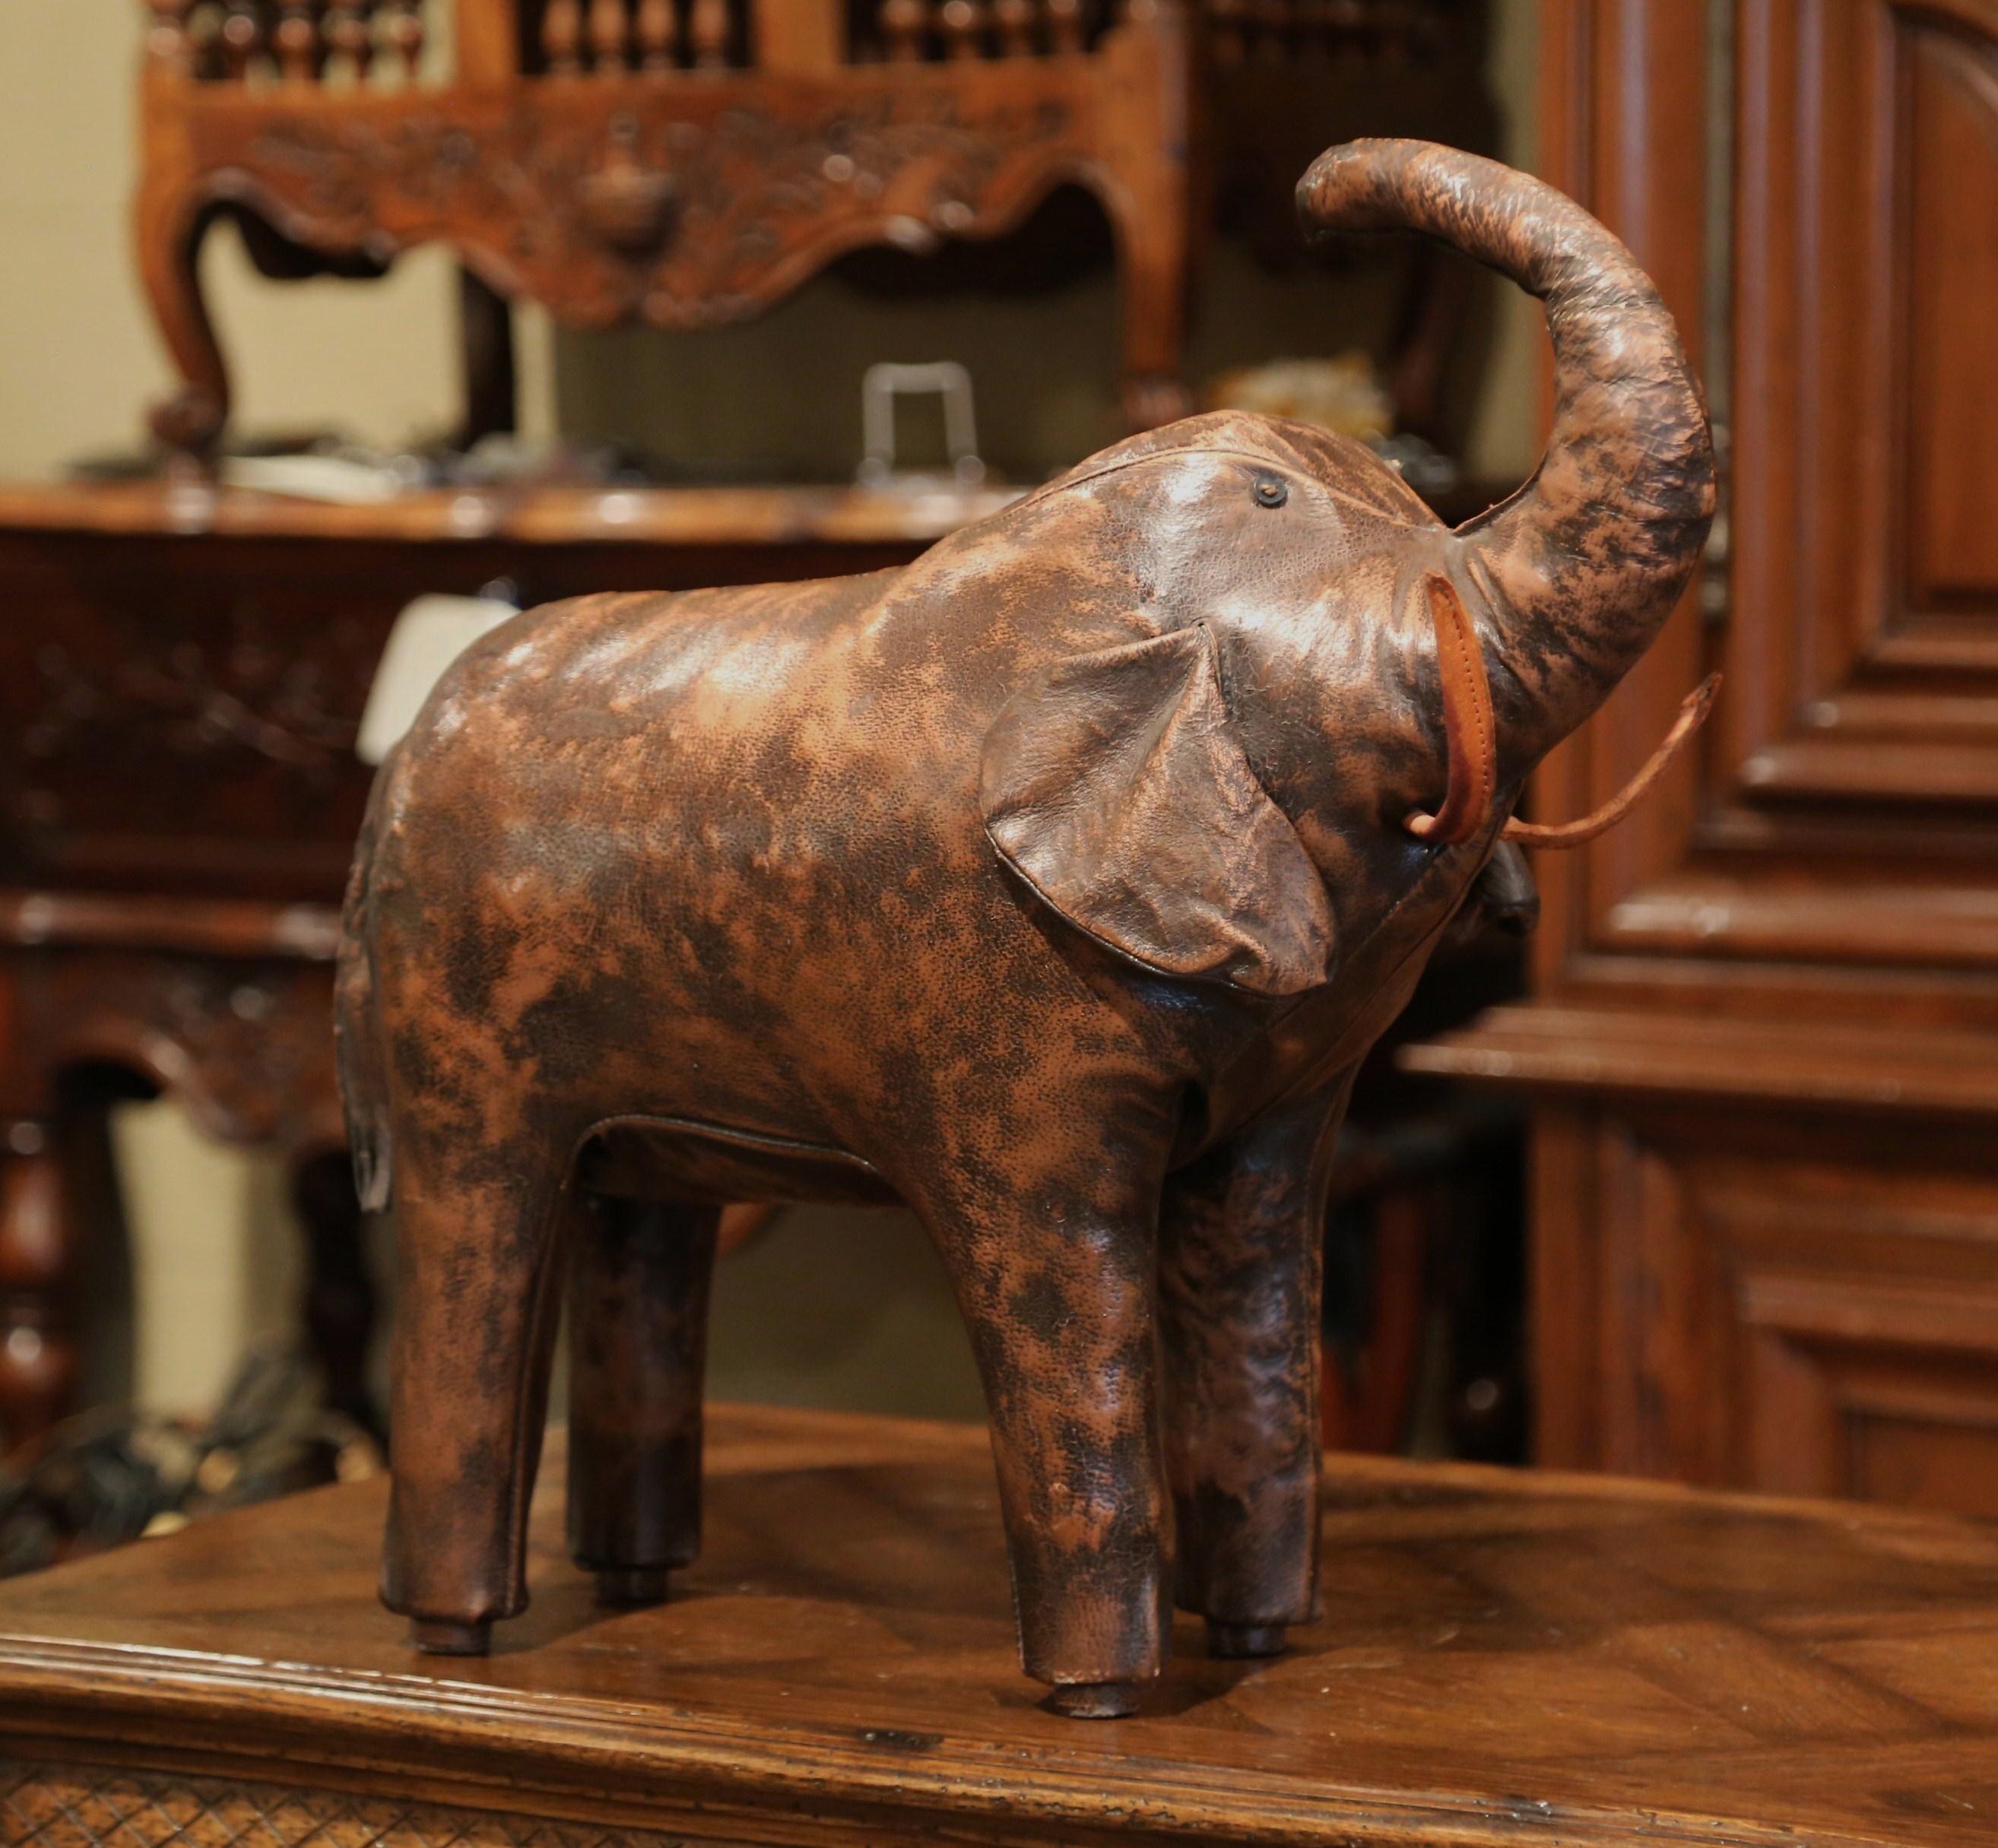 Rustic Vintage Spanish Brown Leather Elephant Sculpture Footstool